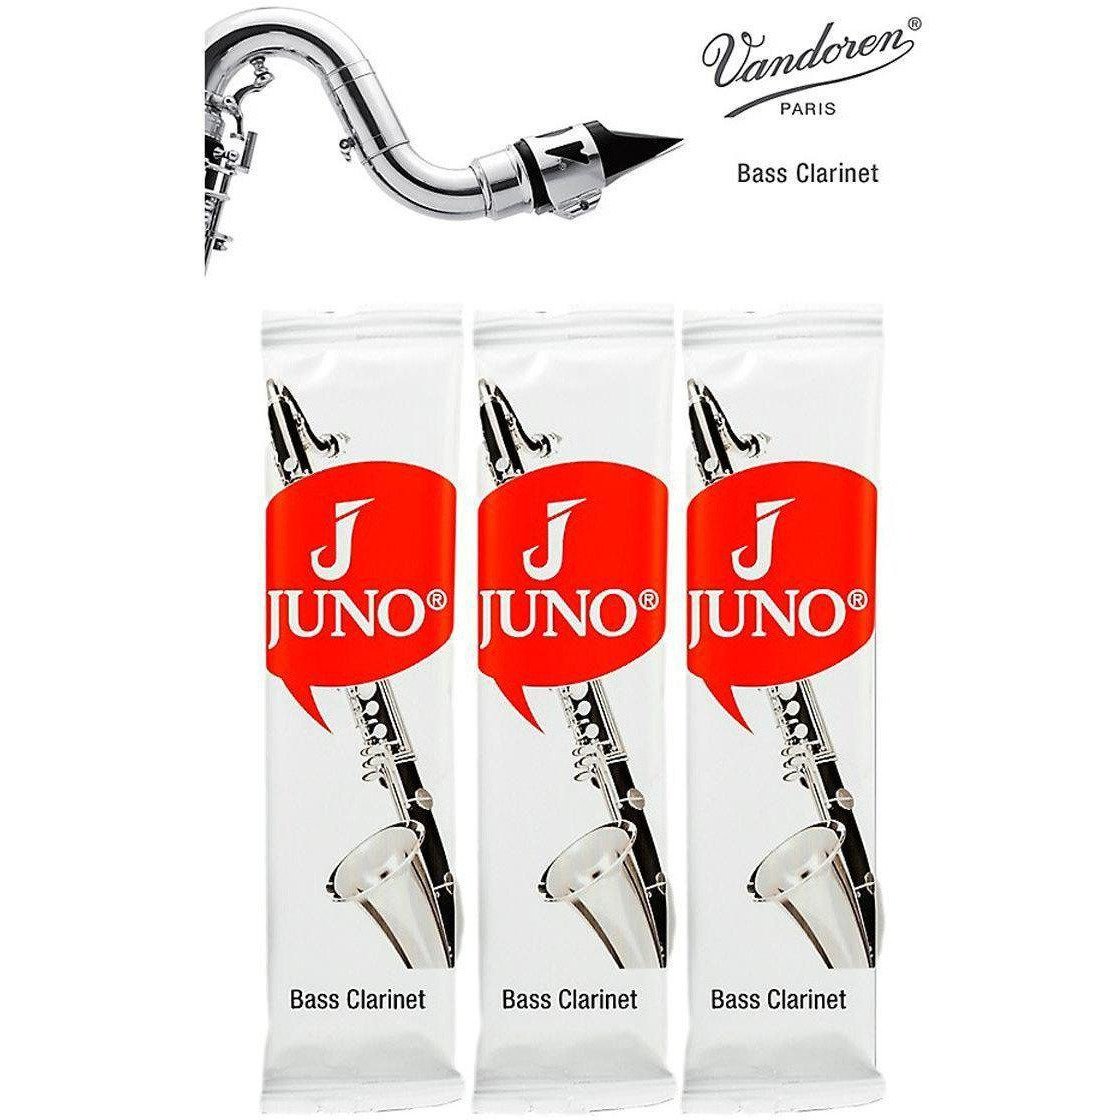 Vandoren Juno Bass Clarinet Reeds 3 Pack-Andy's Music